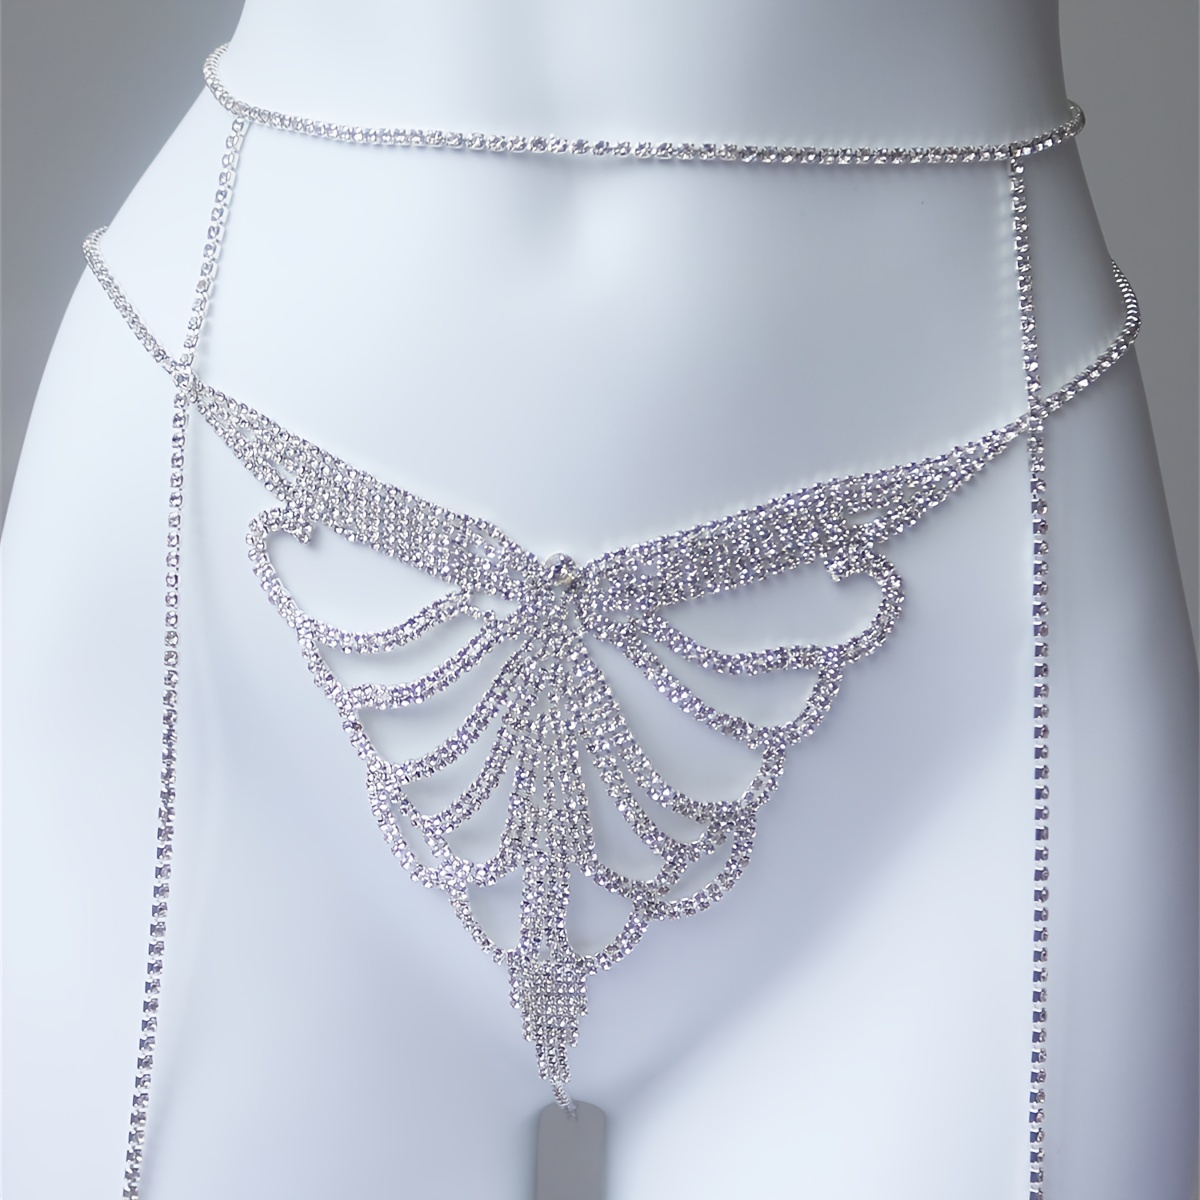 Silver Rhinestone Body Chain Cross Over Necklace Bra Harness Belly